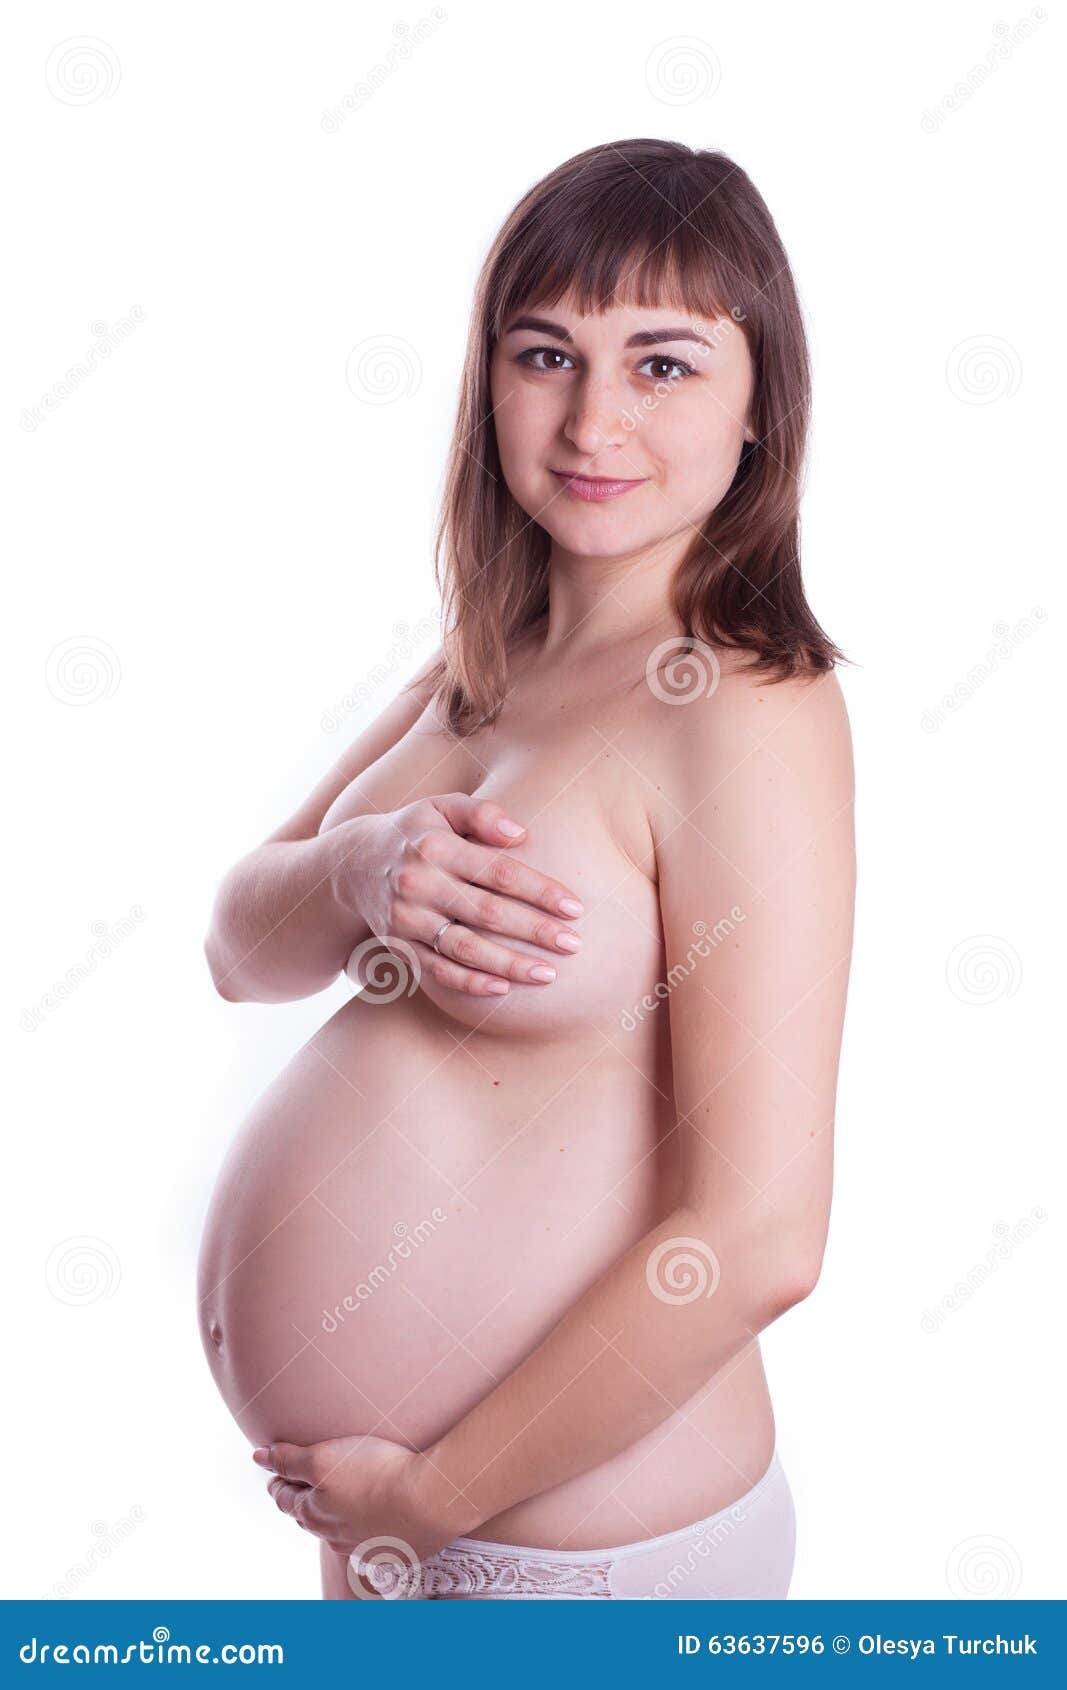 Cute pregnant girls nude